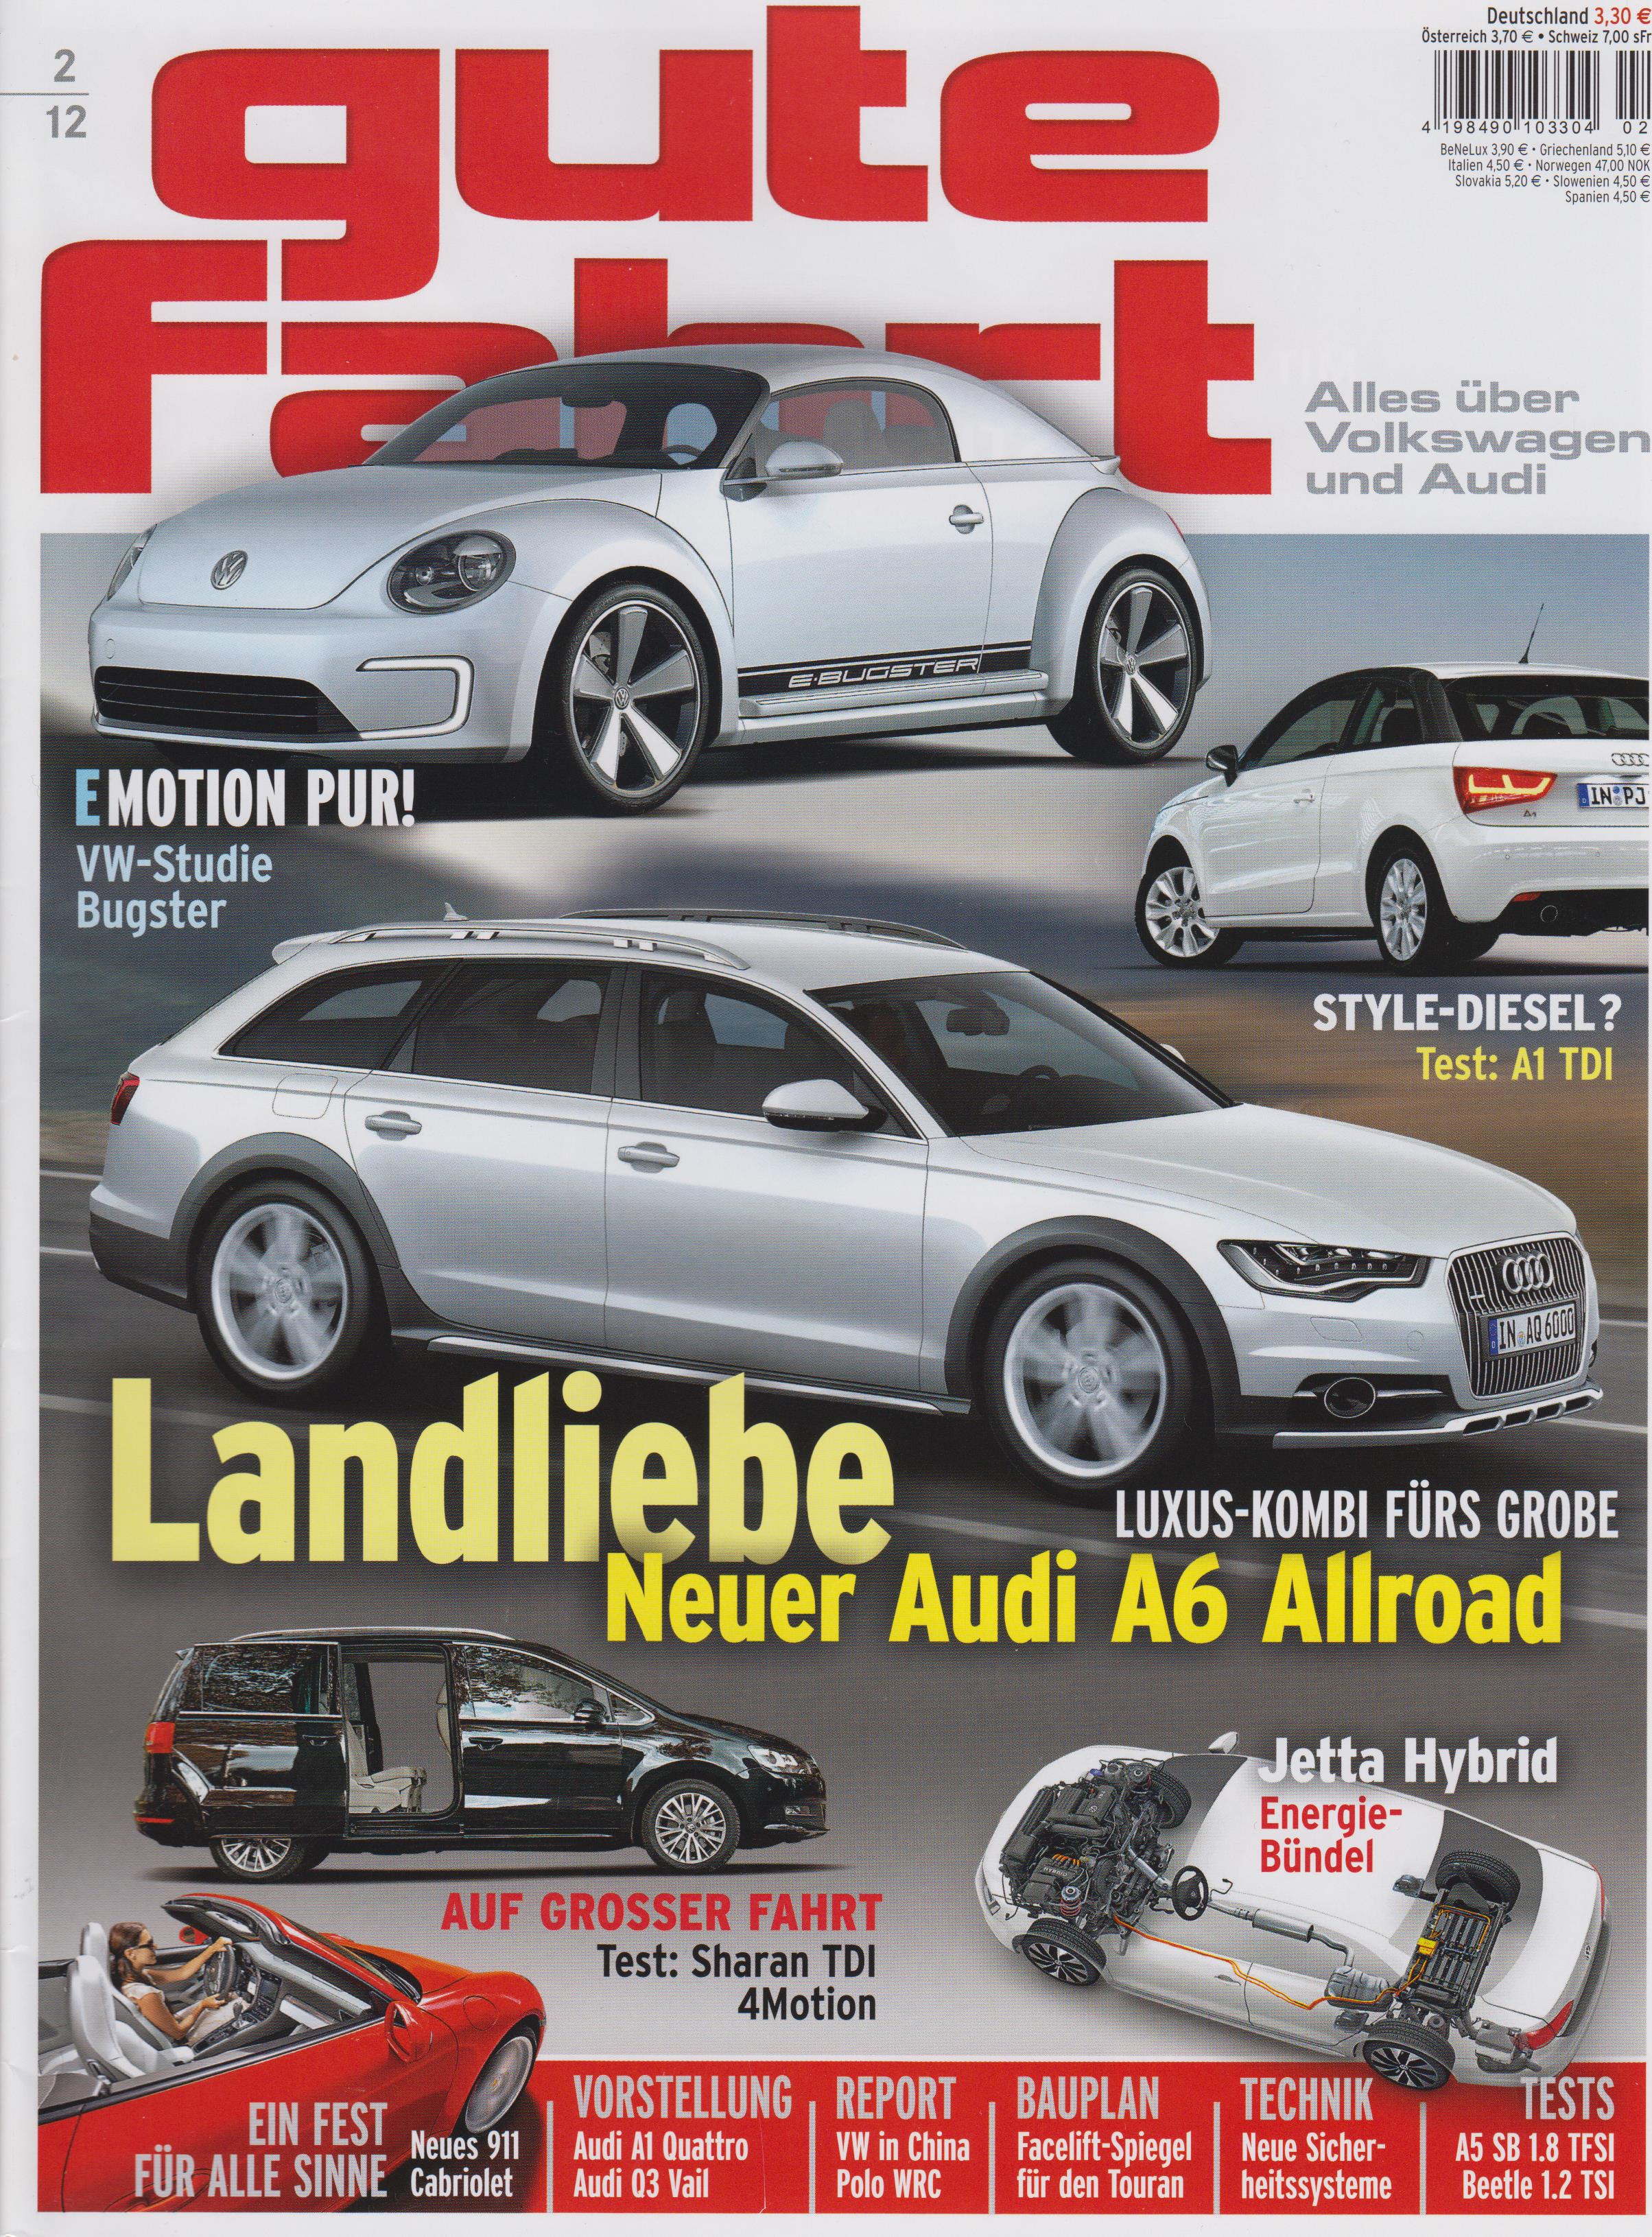 Revista especializada Gute Reise 02 2012